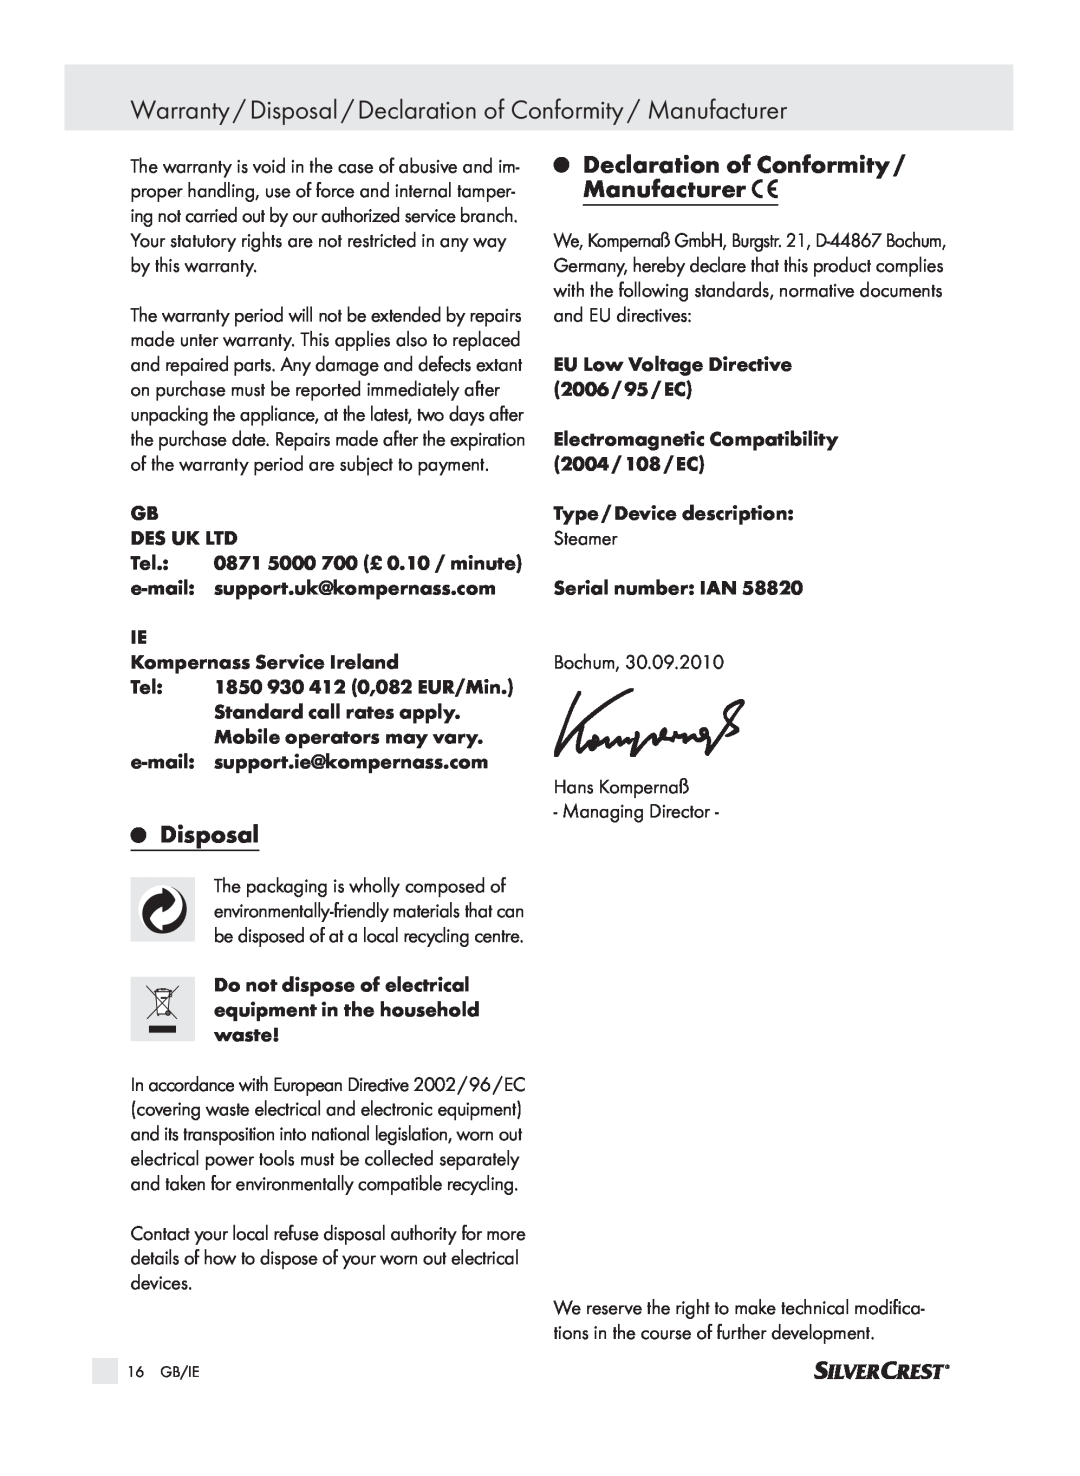 Kompernass SDG 800 A1 manual Warranty / Disposal / Declaration of Conformity / Manufacturer, Q Disposal 